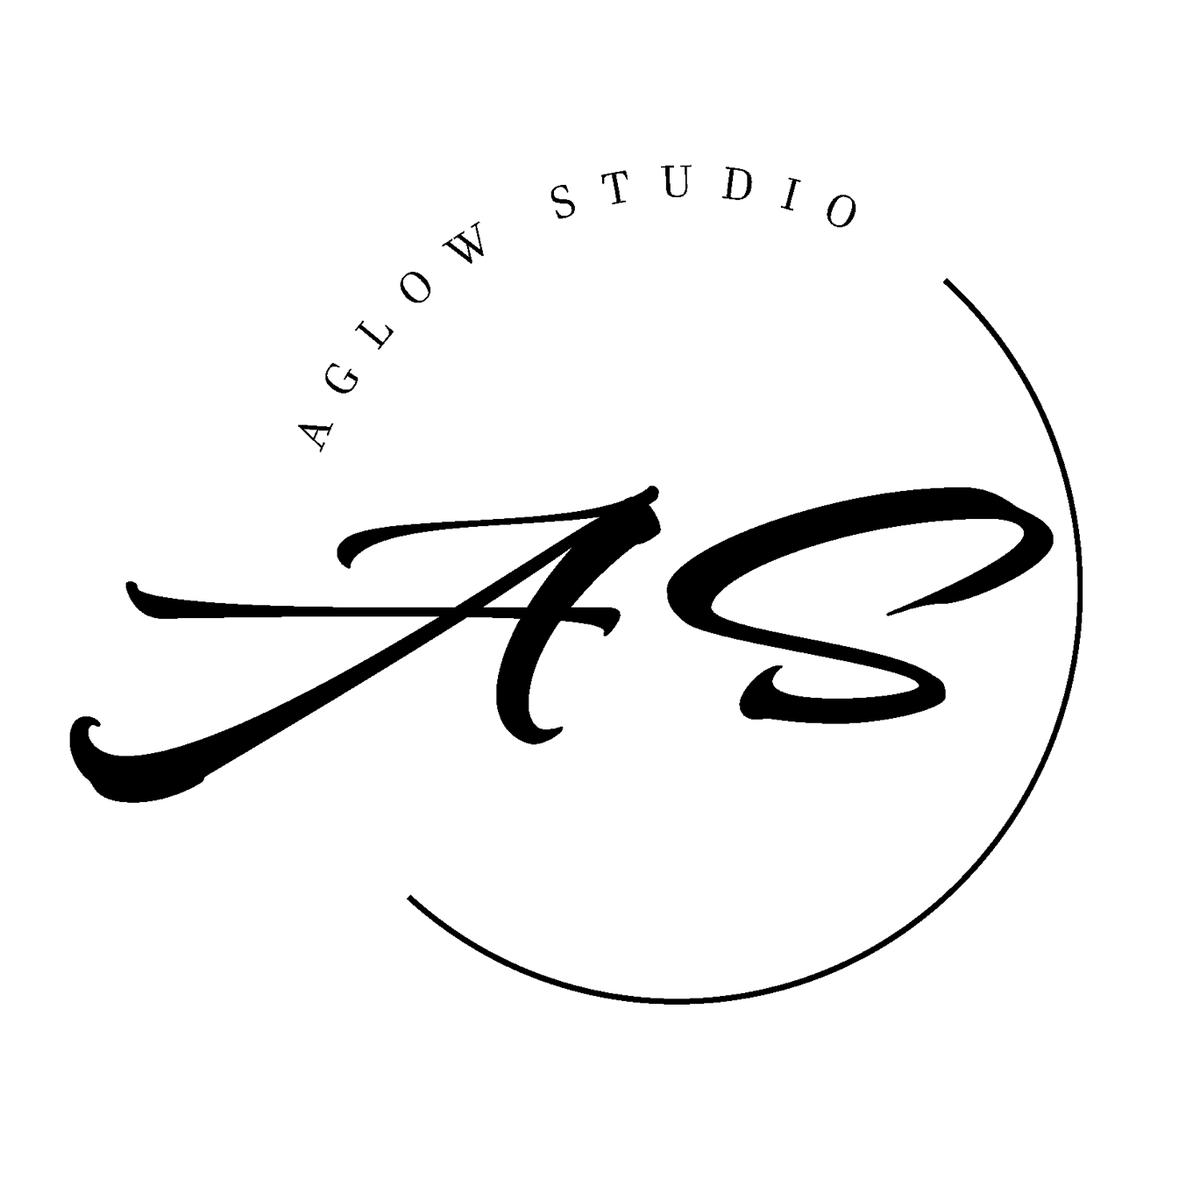 Aglow Studio's images